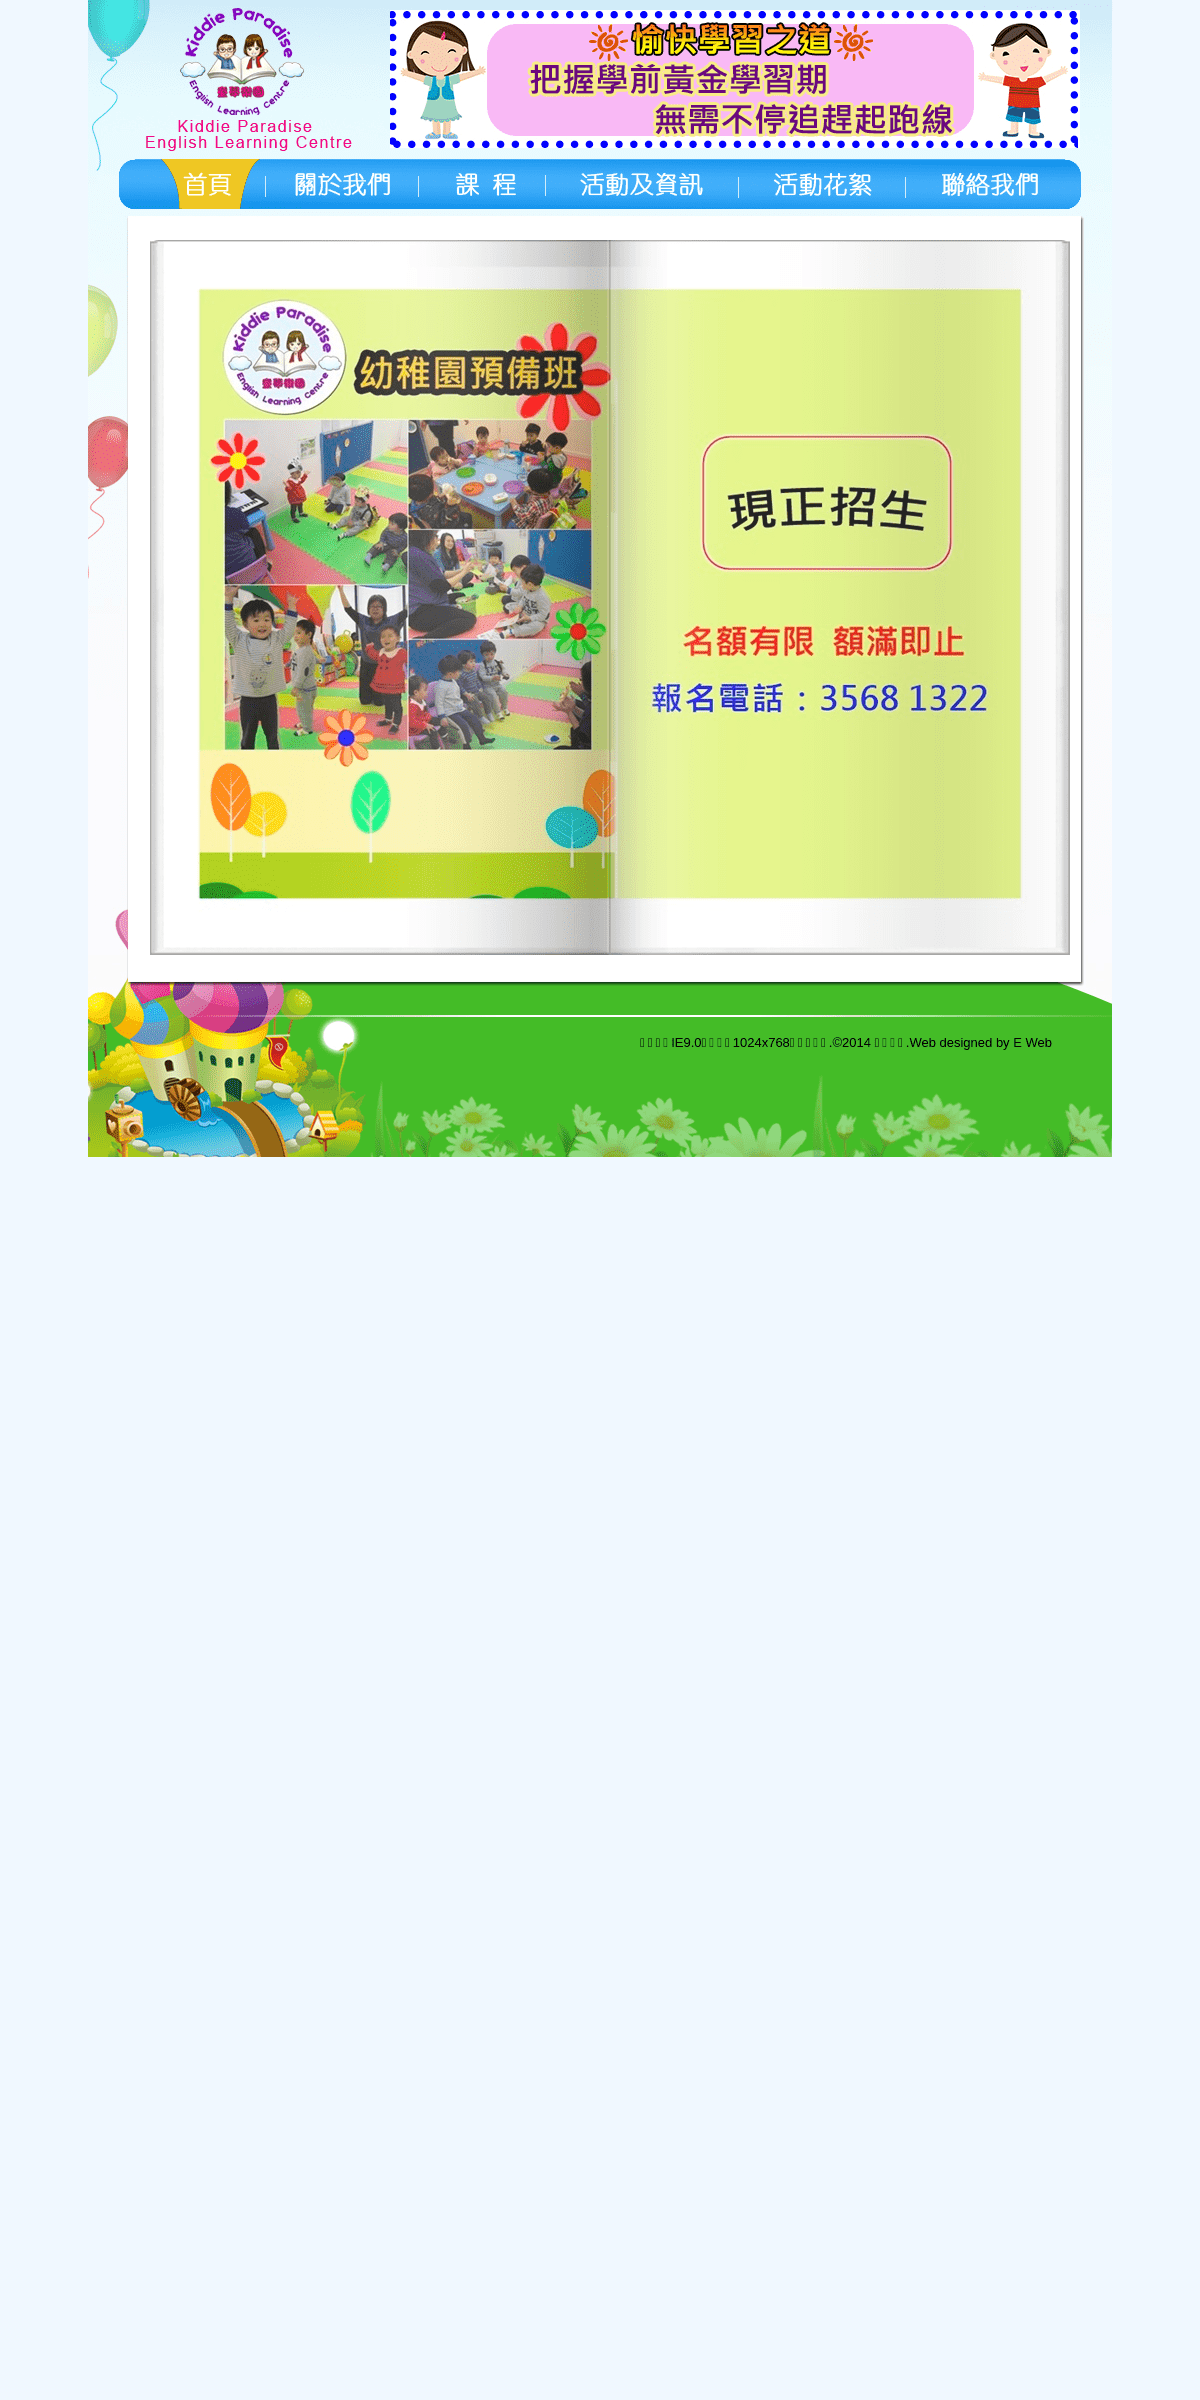 A complete backup of kiddie-paradise.com.hk